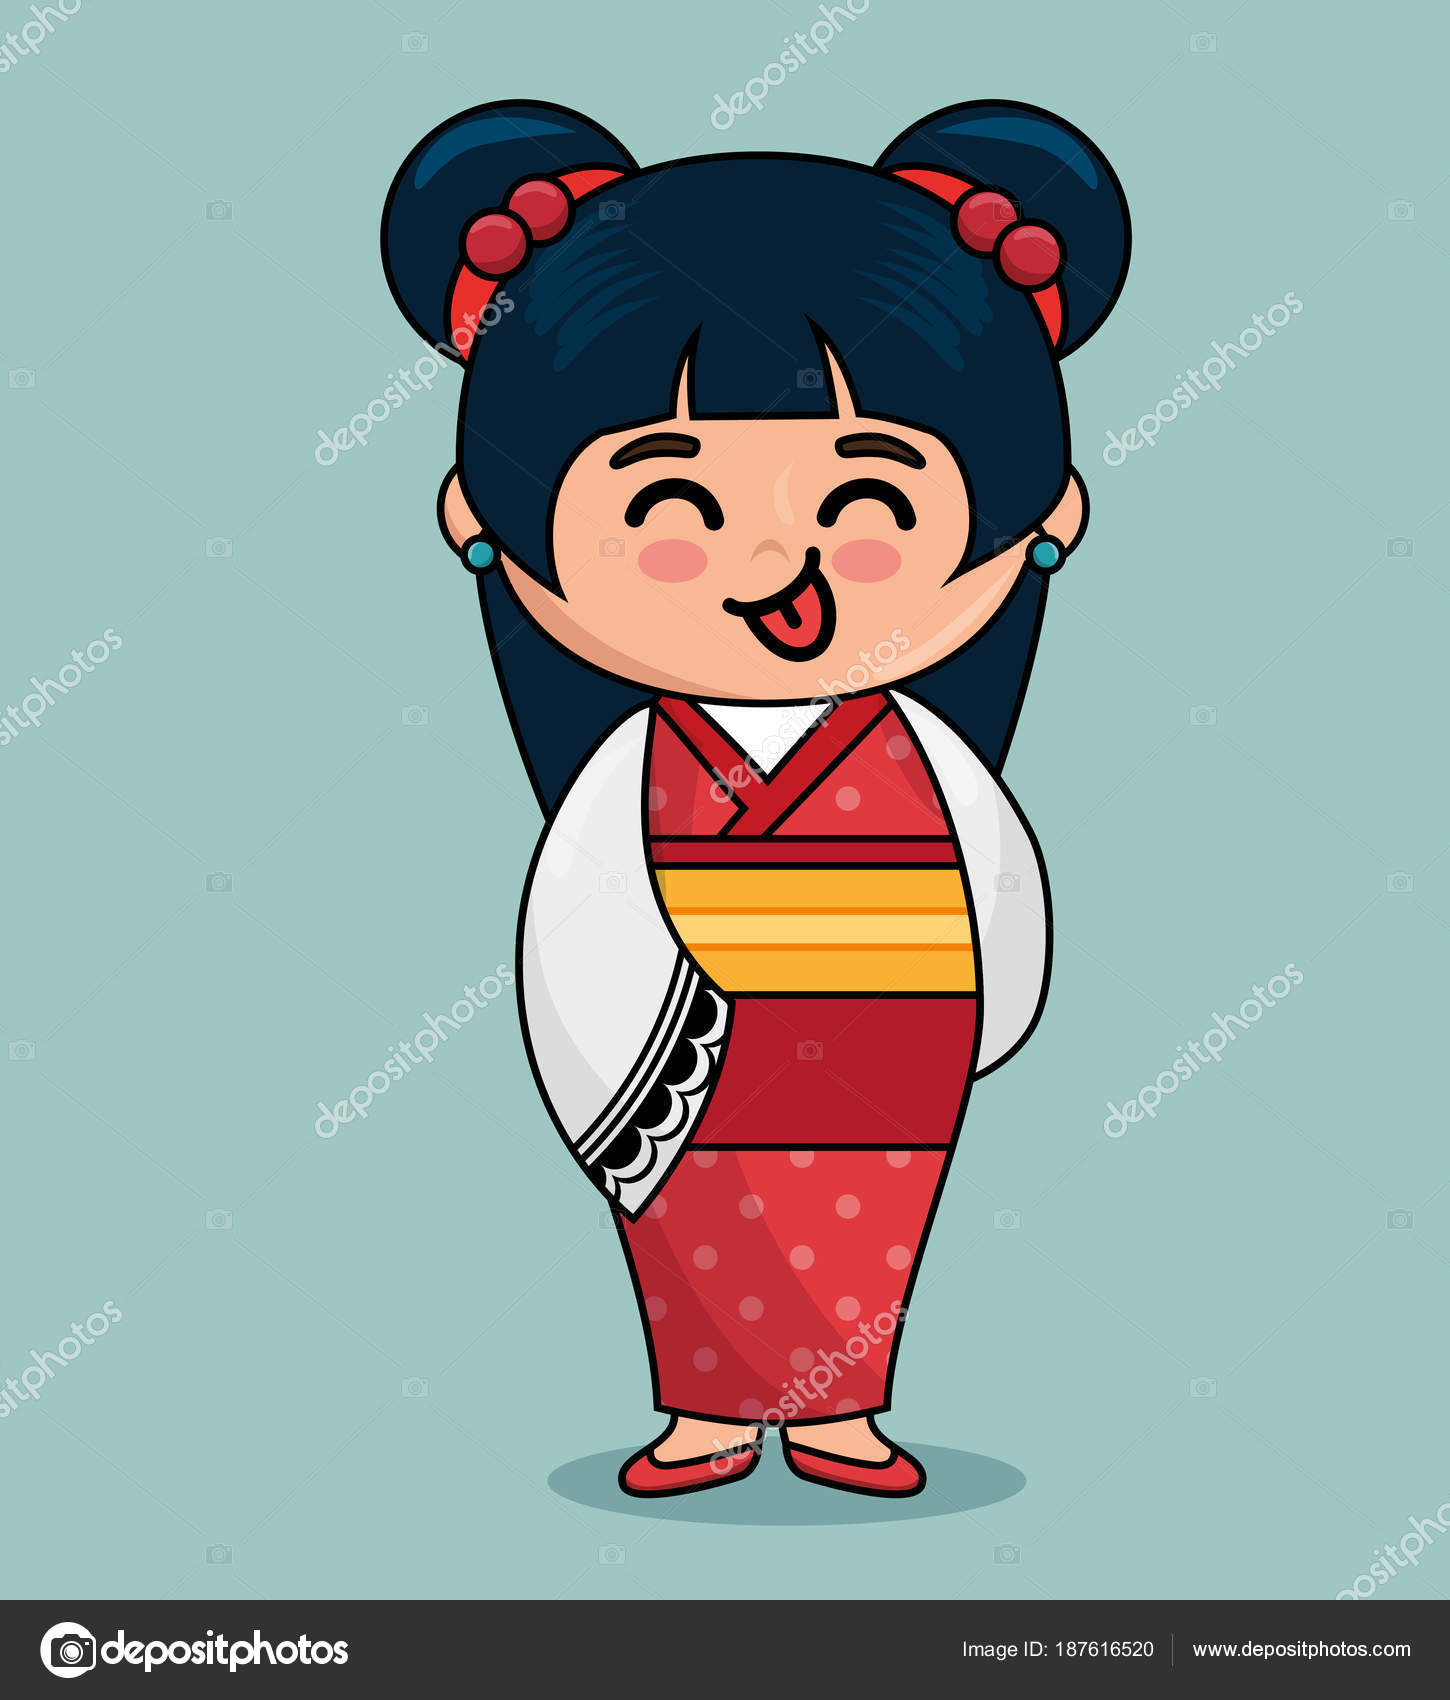 Bonito japonês boneca kawaii estilo imagem vetorial de yupiramos© 187616520